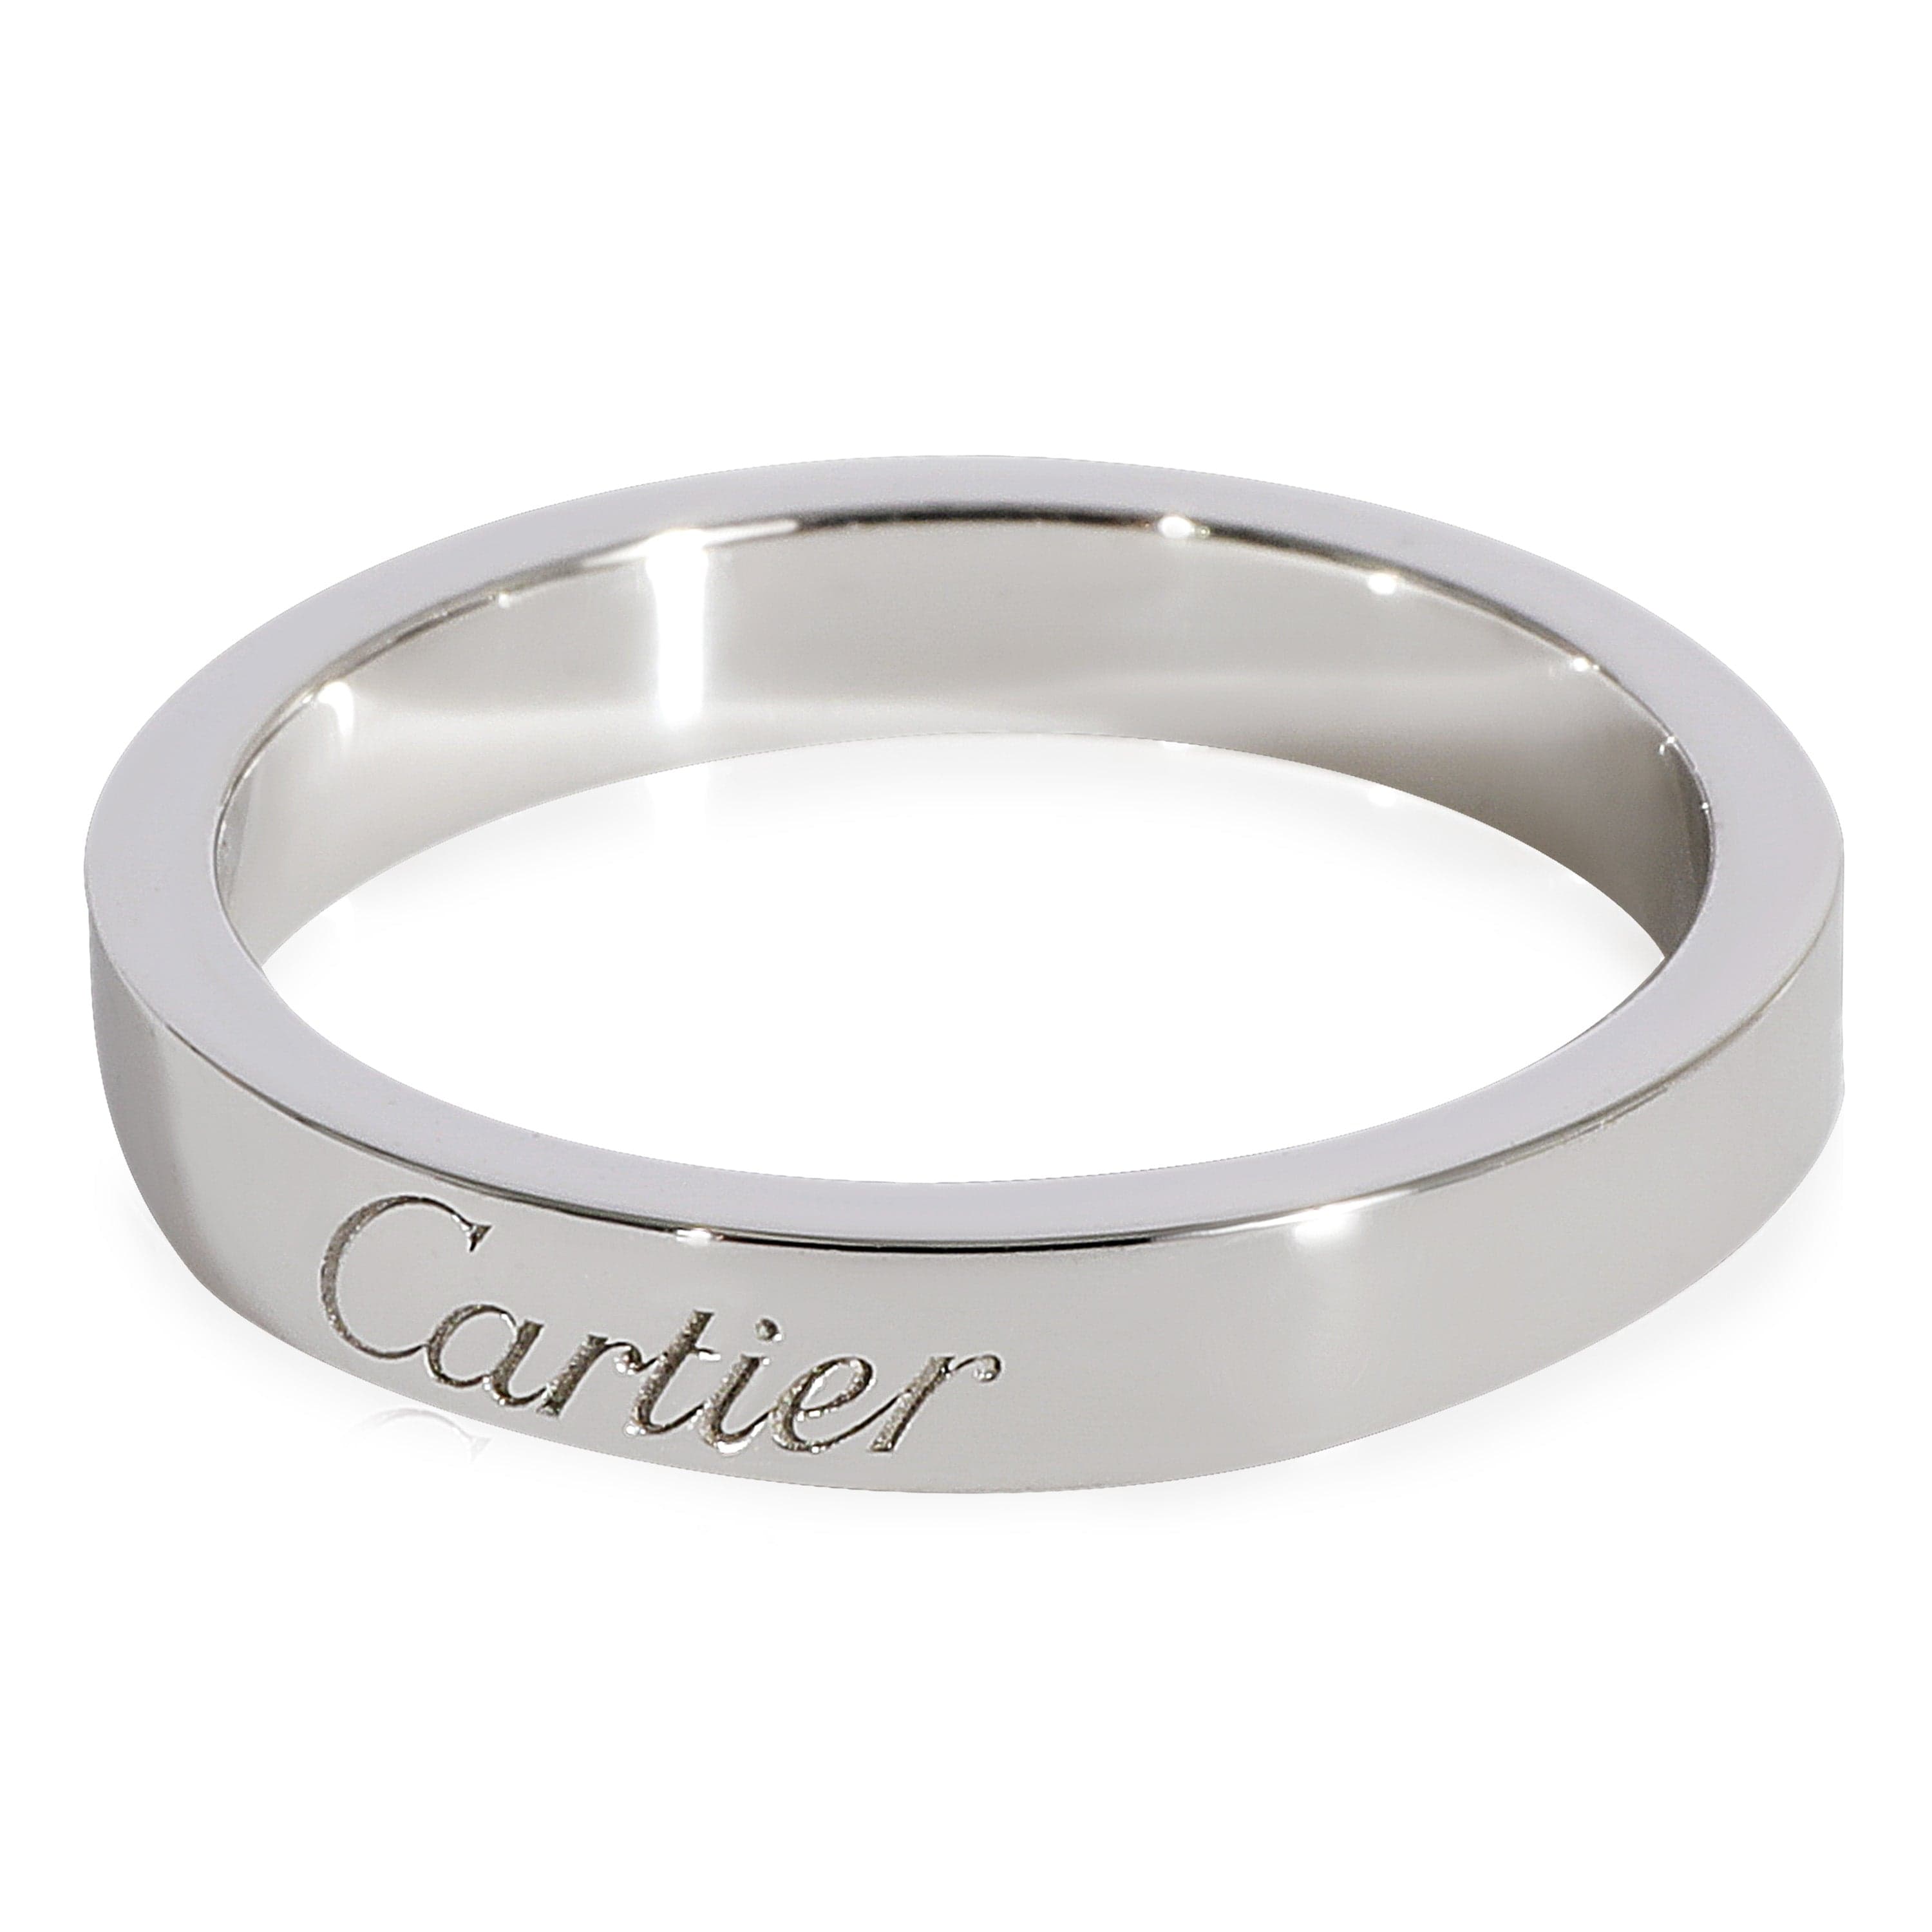 Cartier Cartier C De Cartier Wedding Band in Platinum